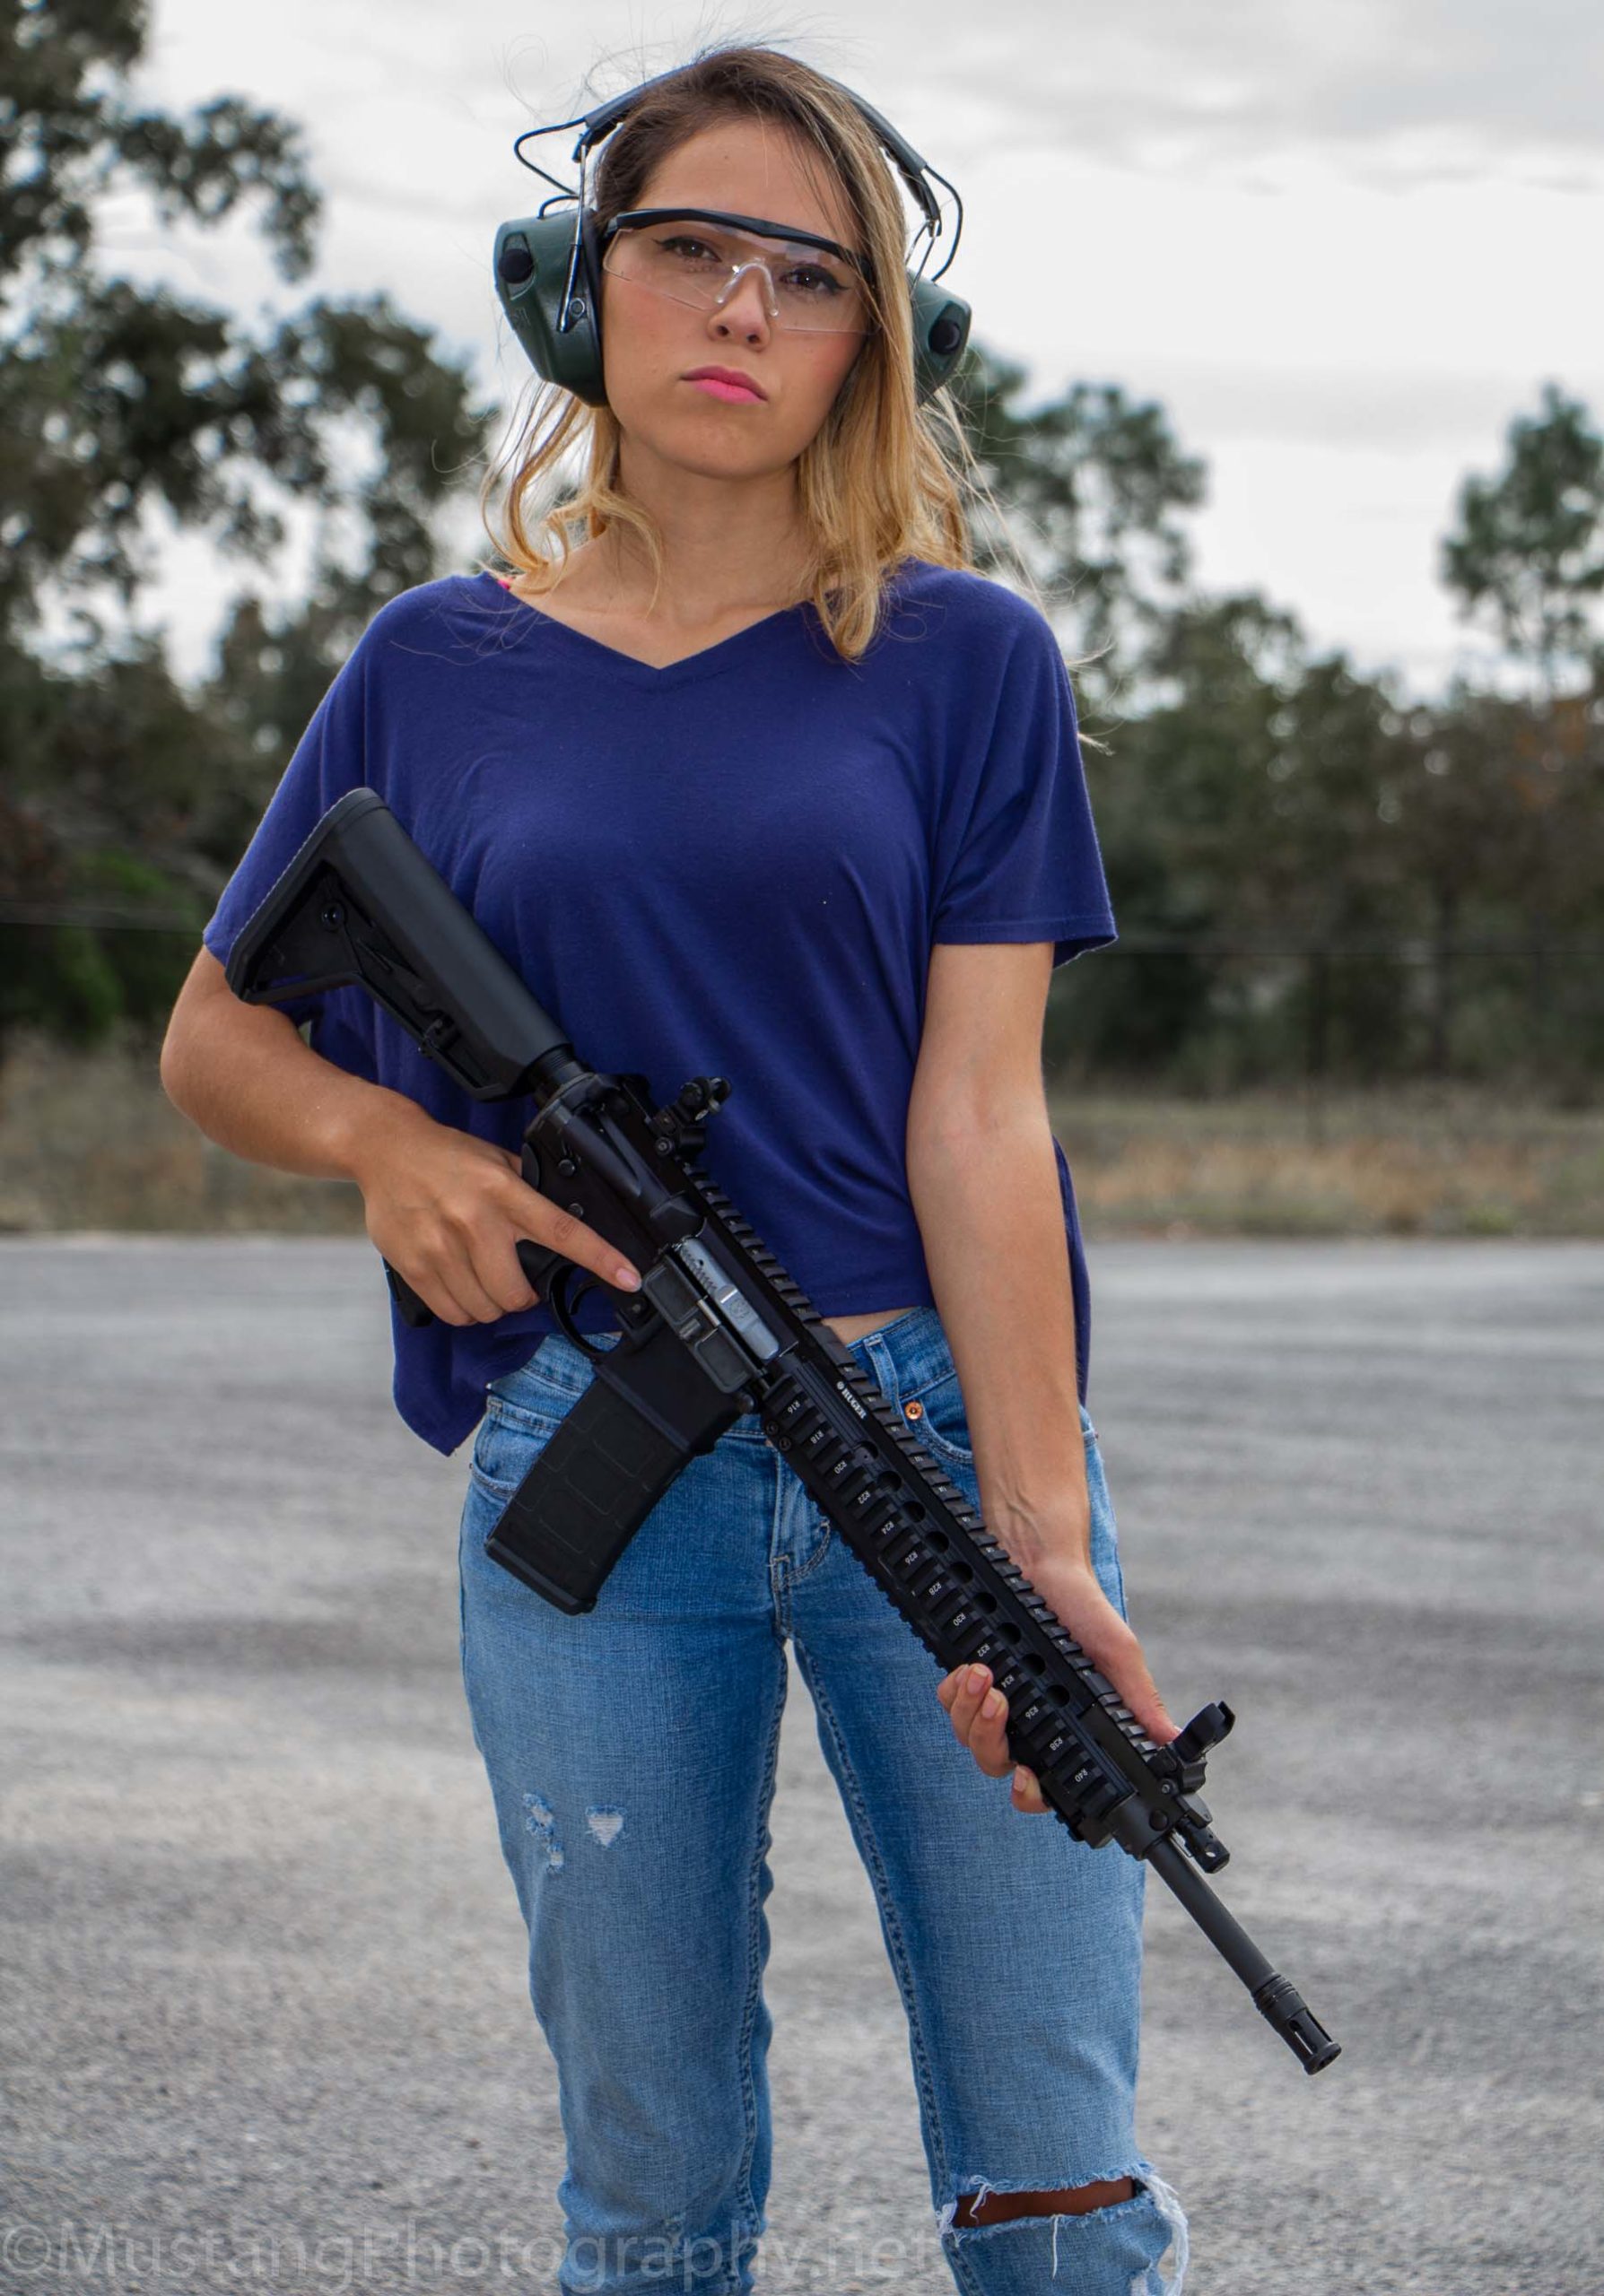 Beautiful Woman with AR15 Rifle